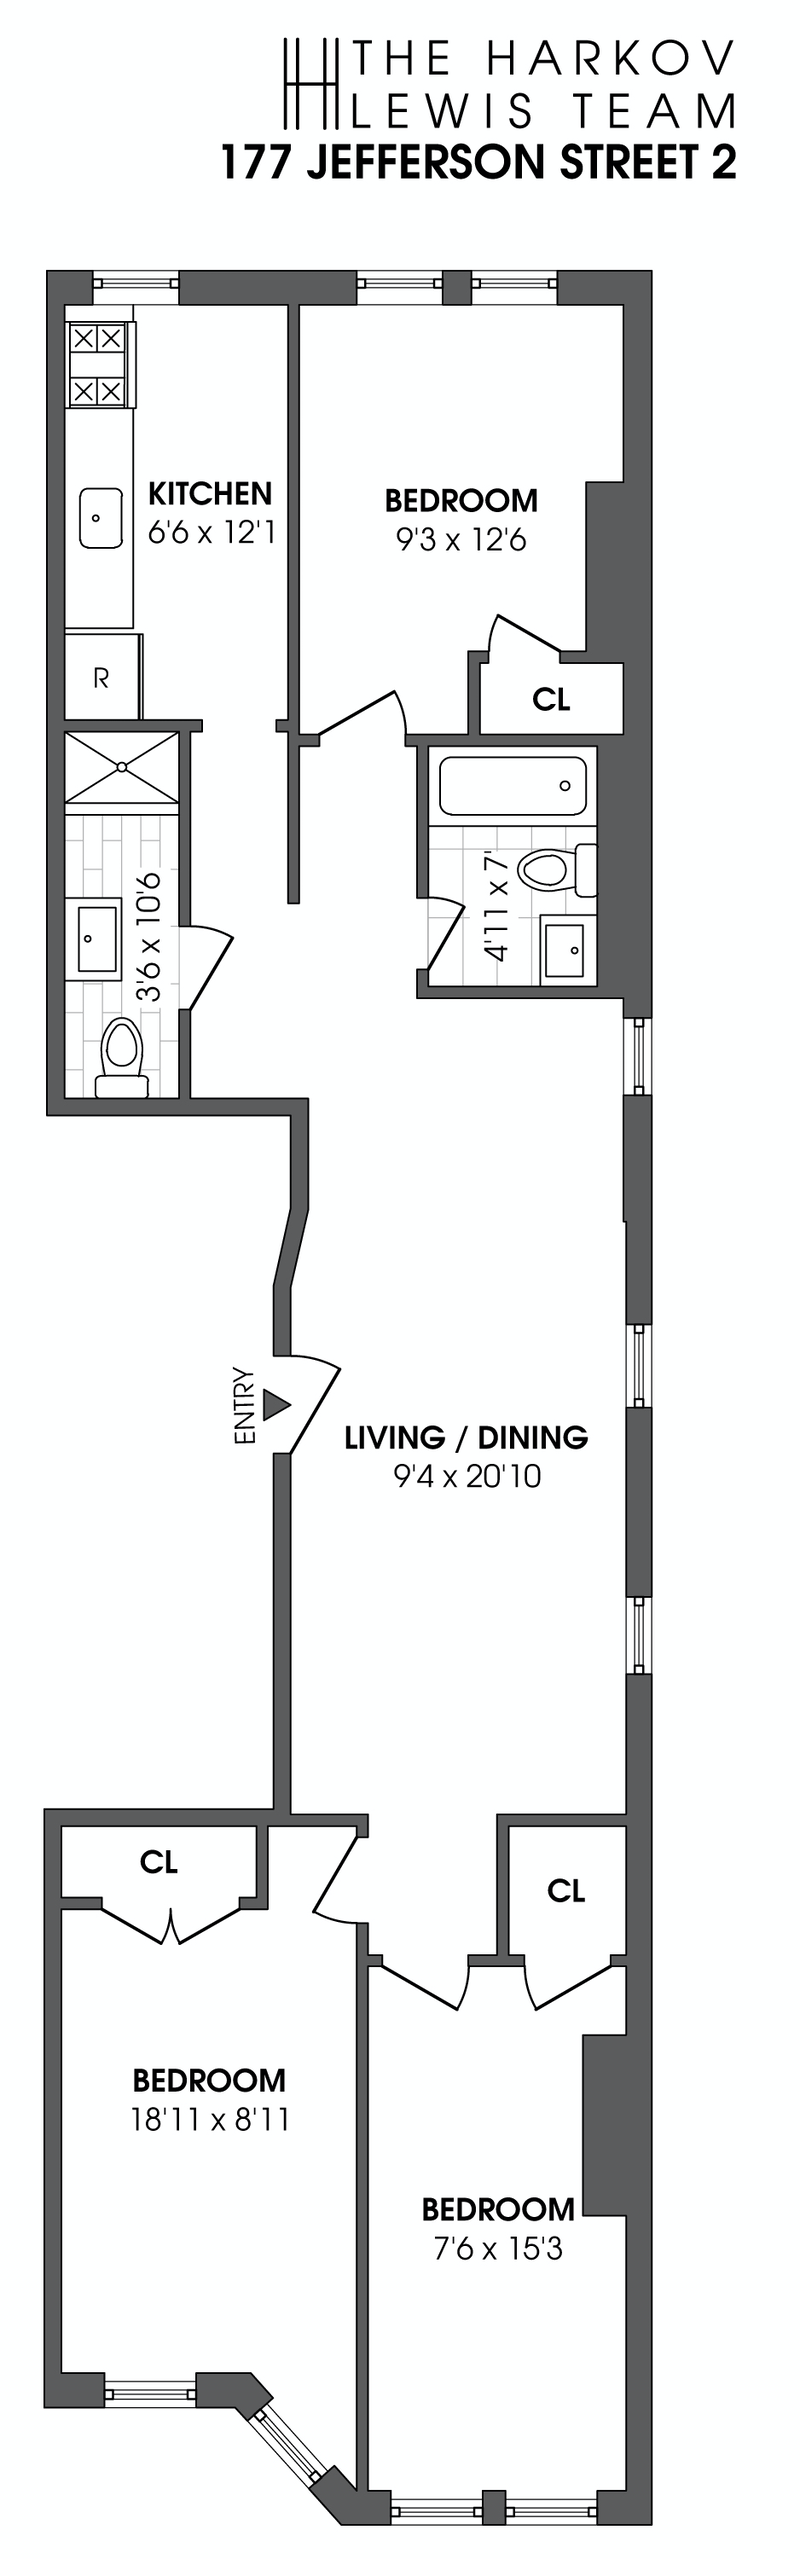 Floorplan for 177 Jefferson Street